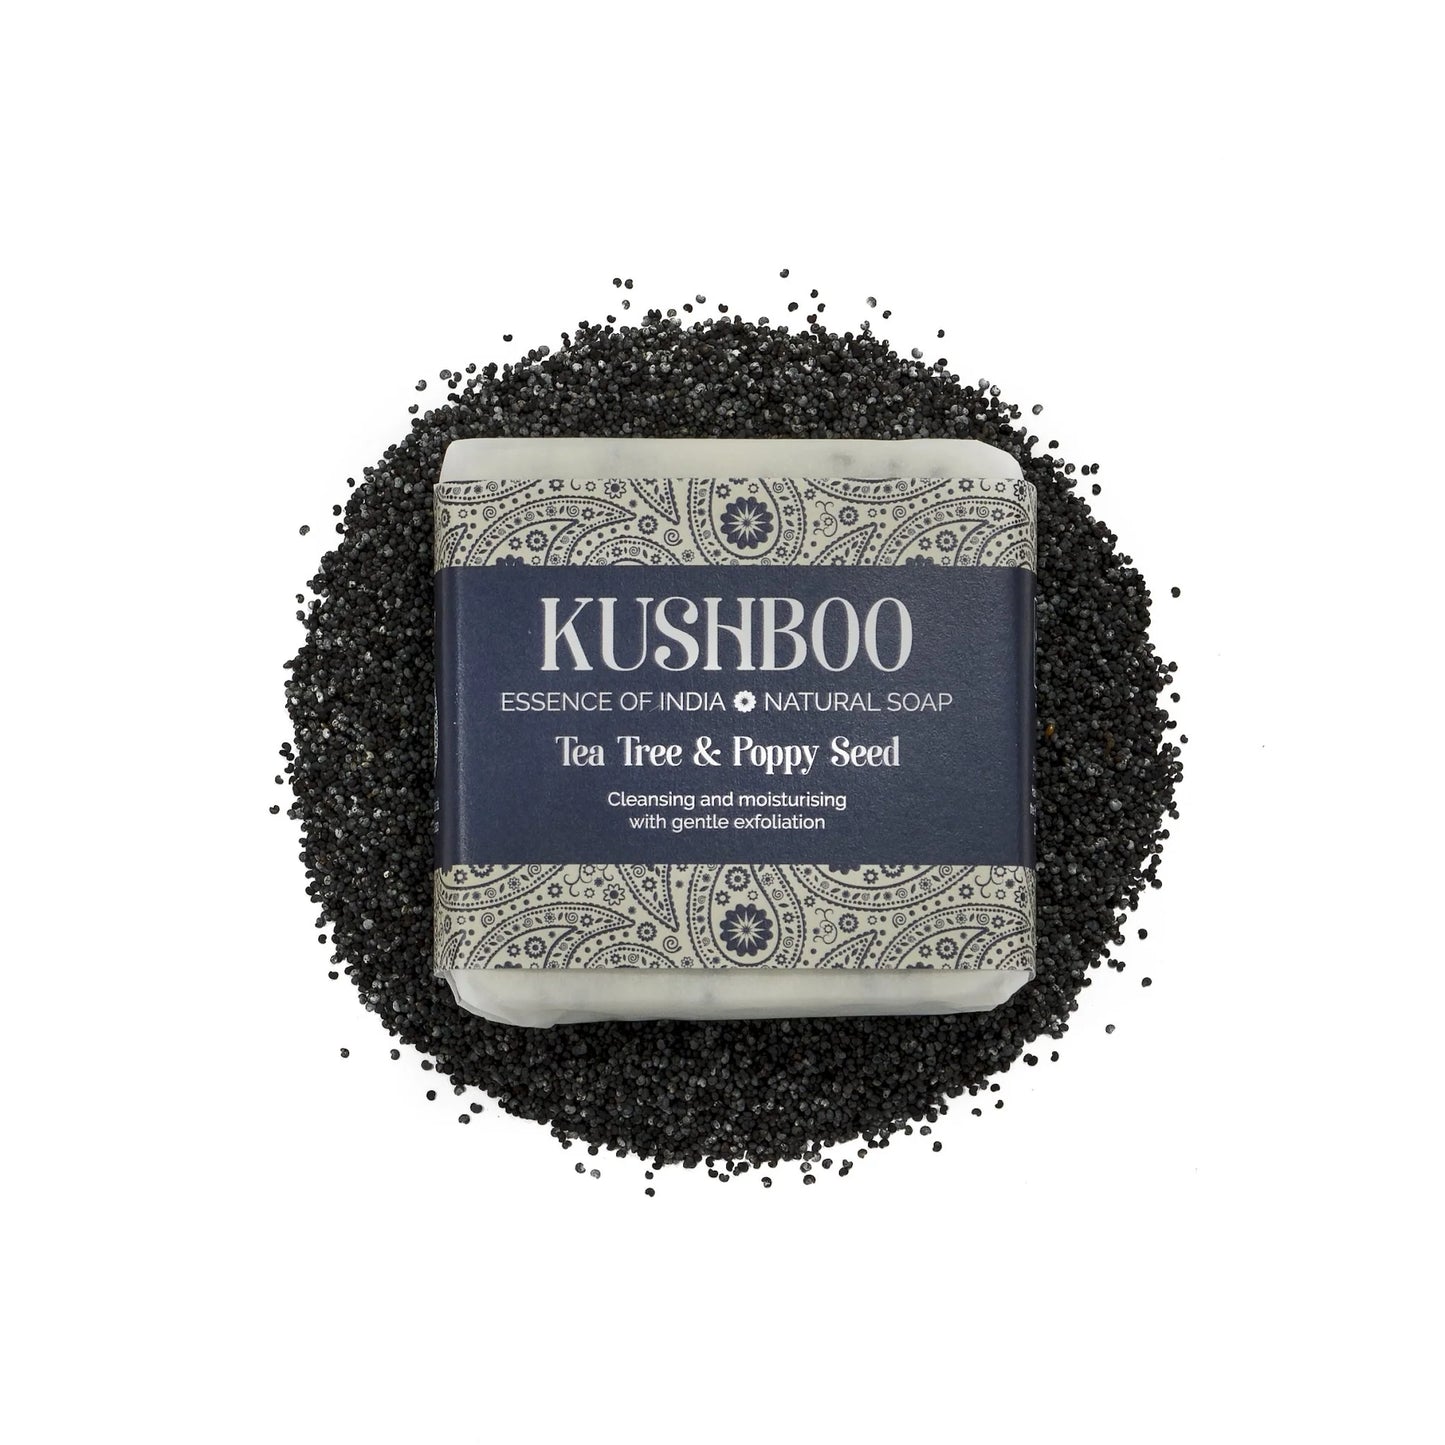 Kushboo Soap Bars